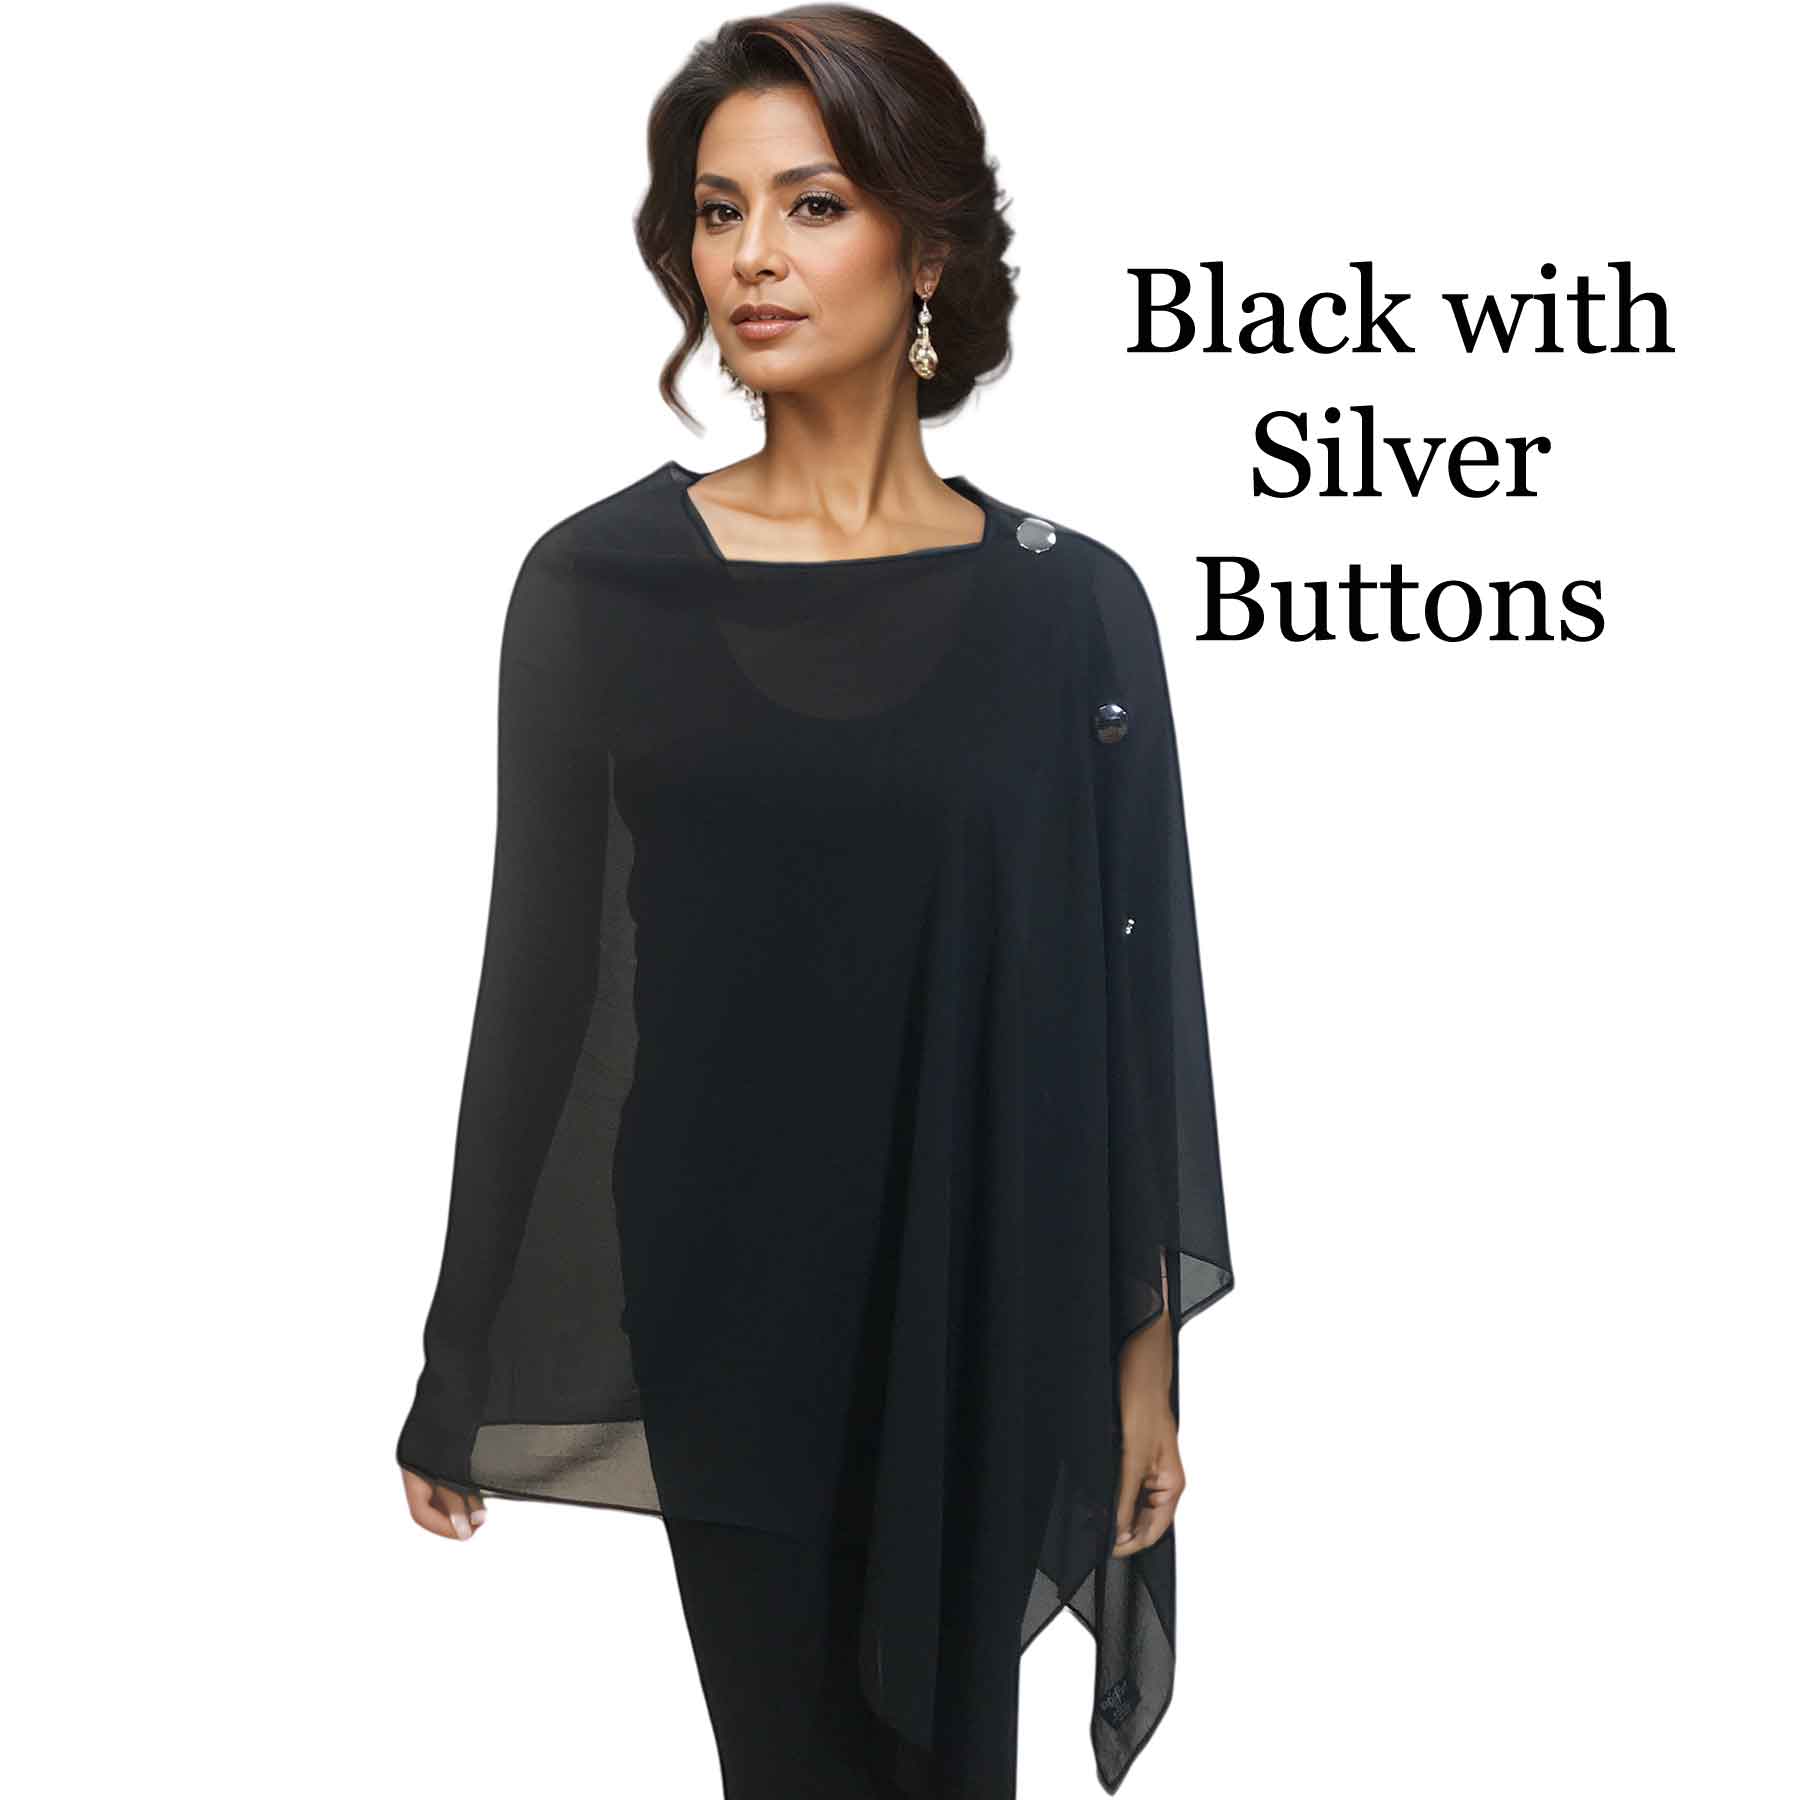 017S - Black w/Silver Buttons<br>
Georgette Button Shawl

